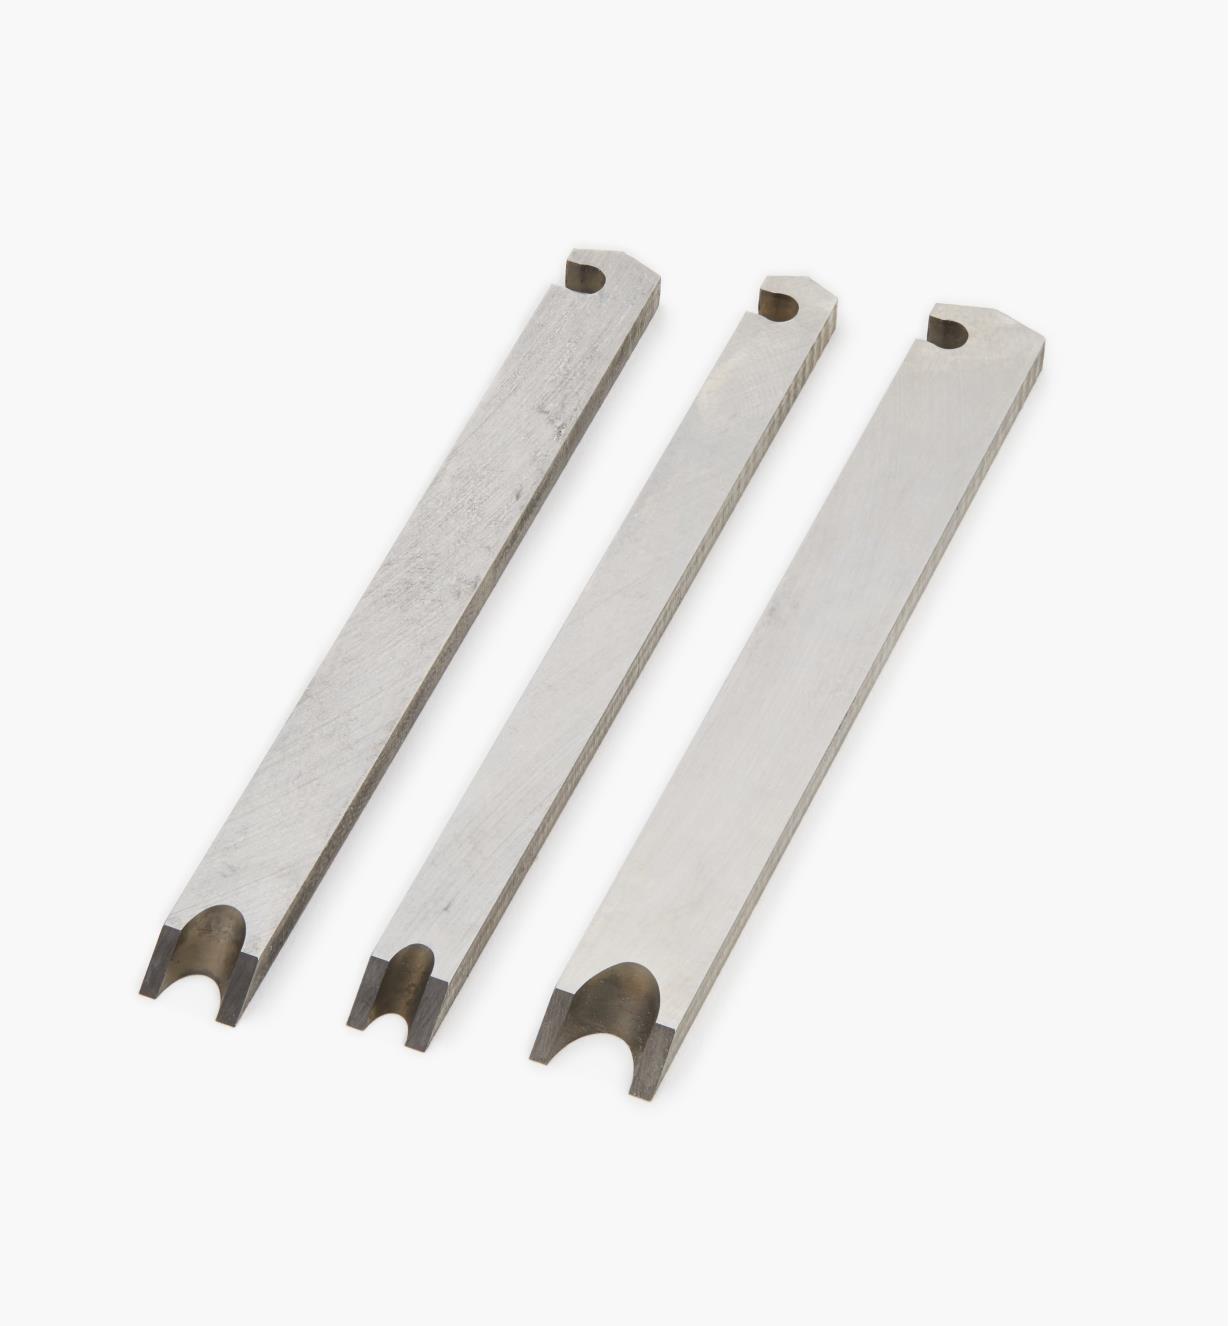 05P5279 - Small LH Beading Blades, Set of 3